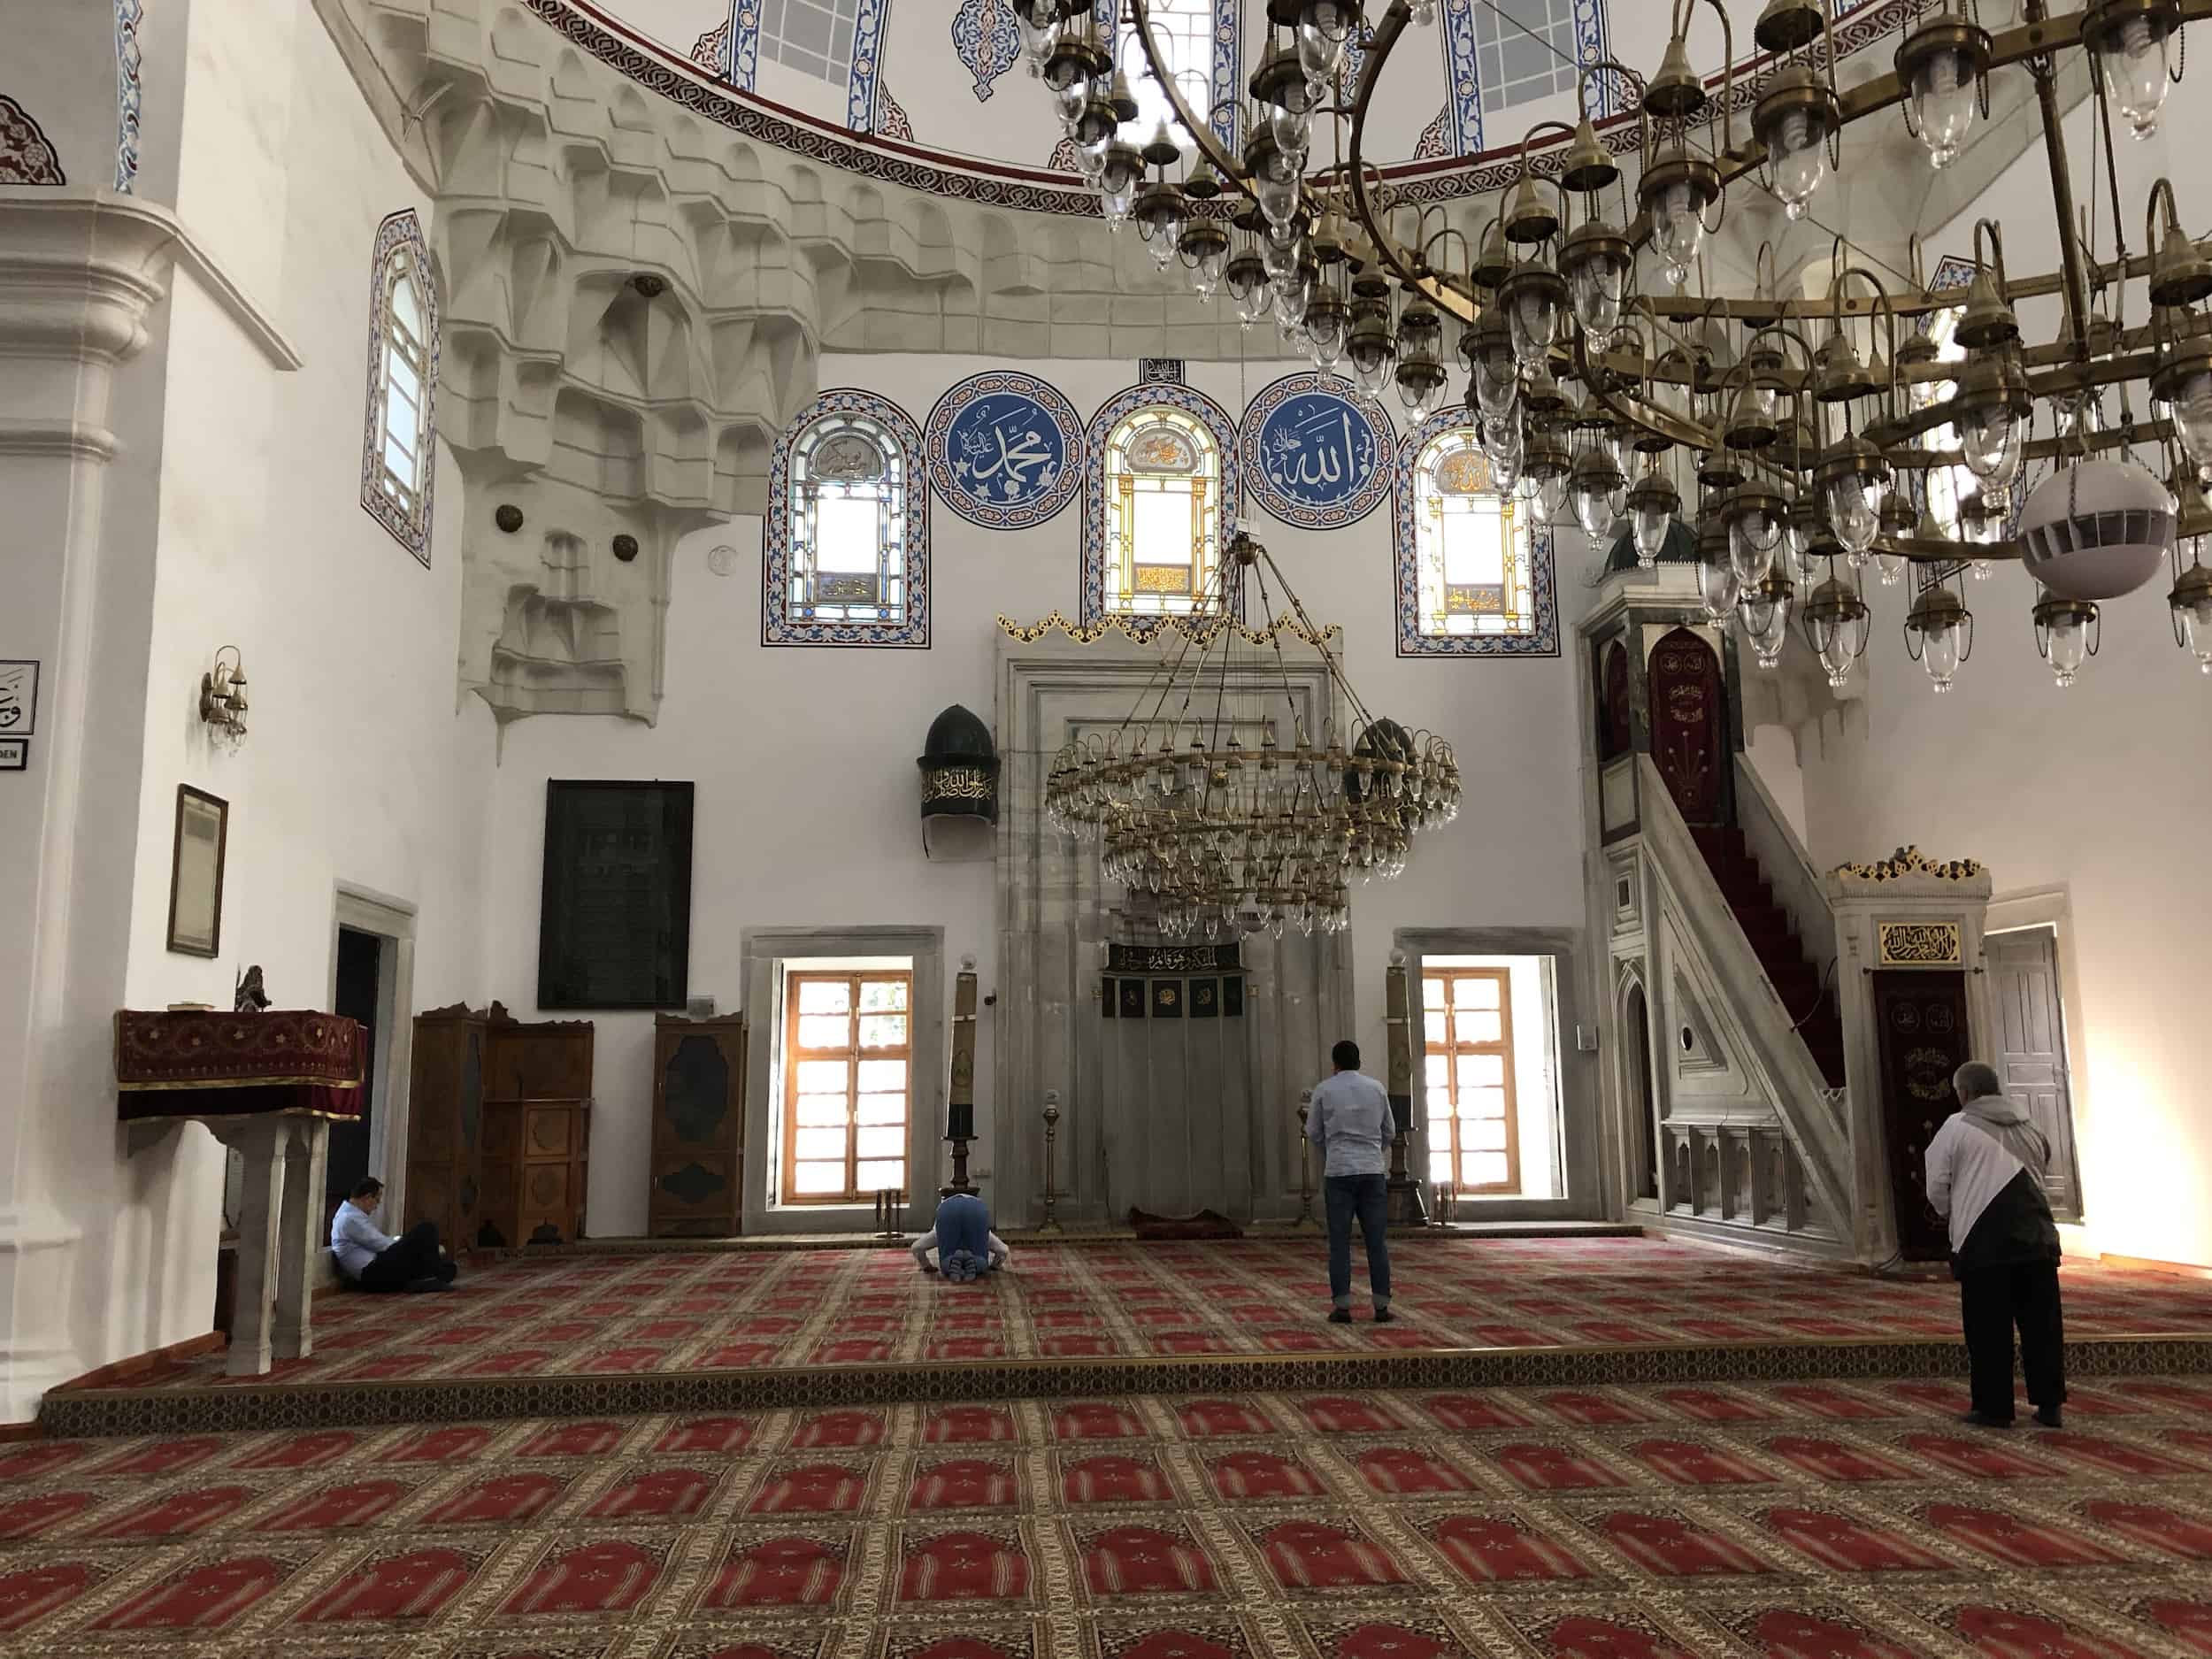 Prayer hall of the Atik Ali Pasha Mosque in Çemberlitaş, Istanbul, Turkey